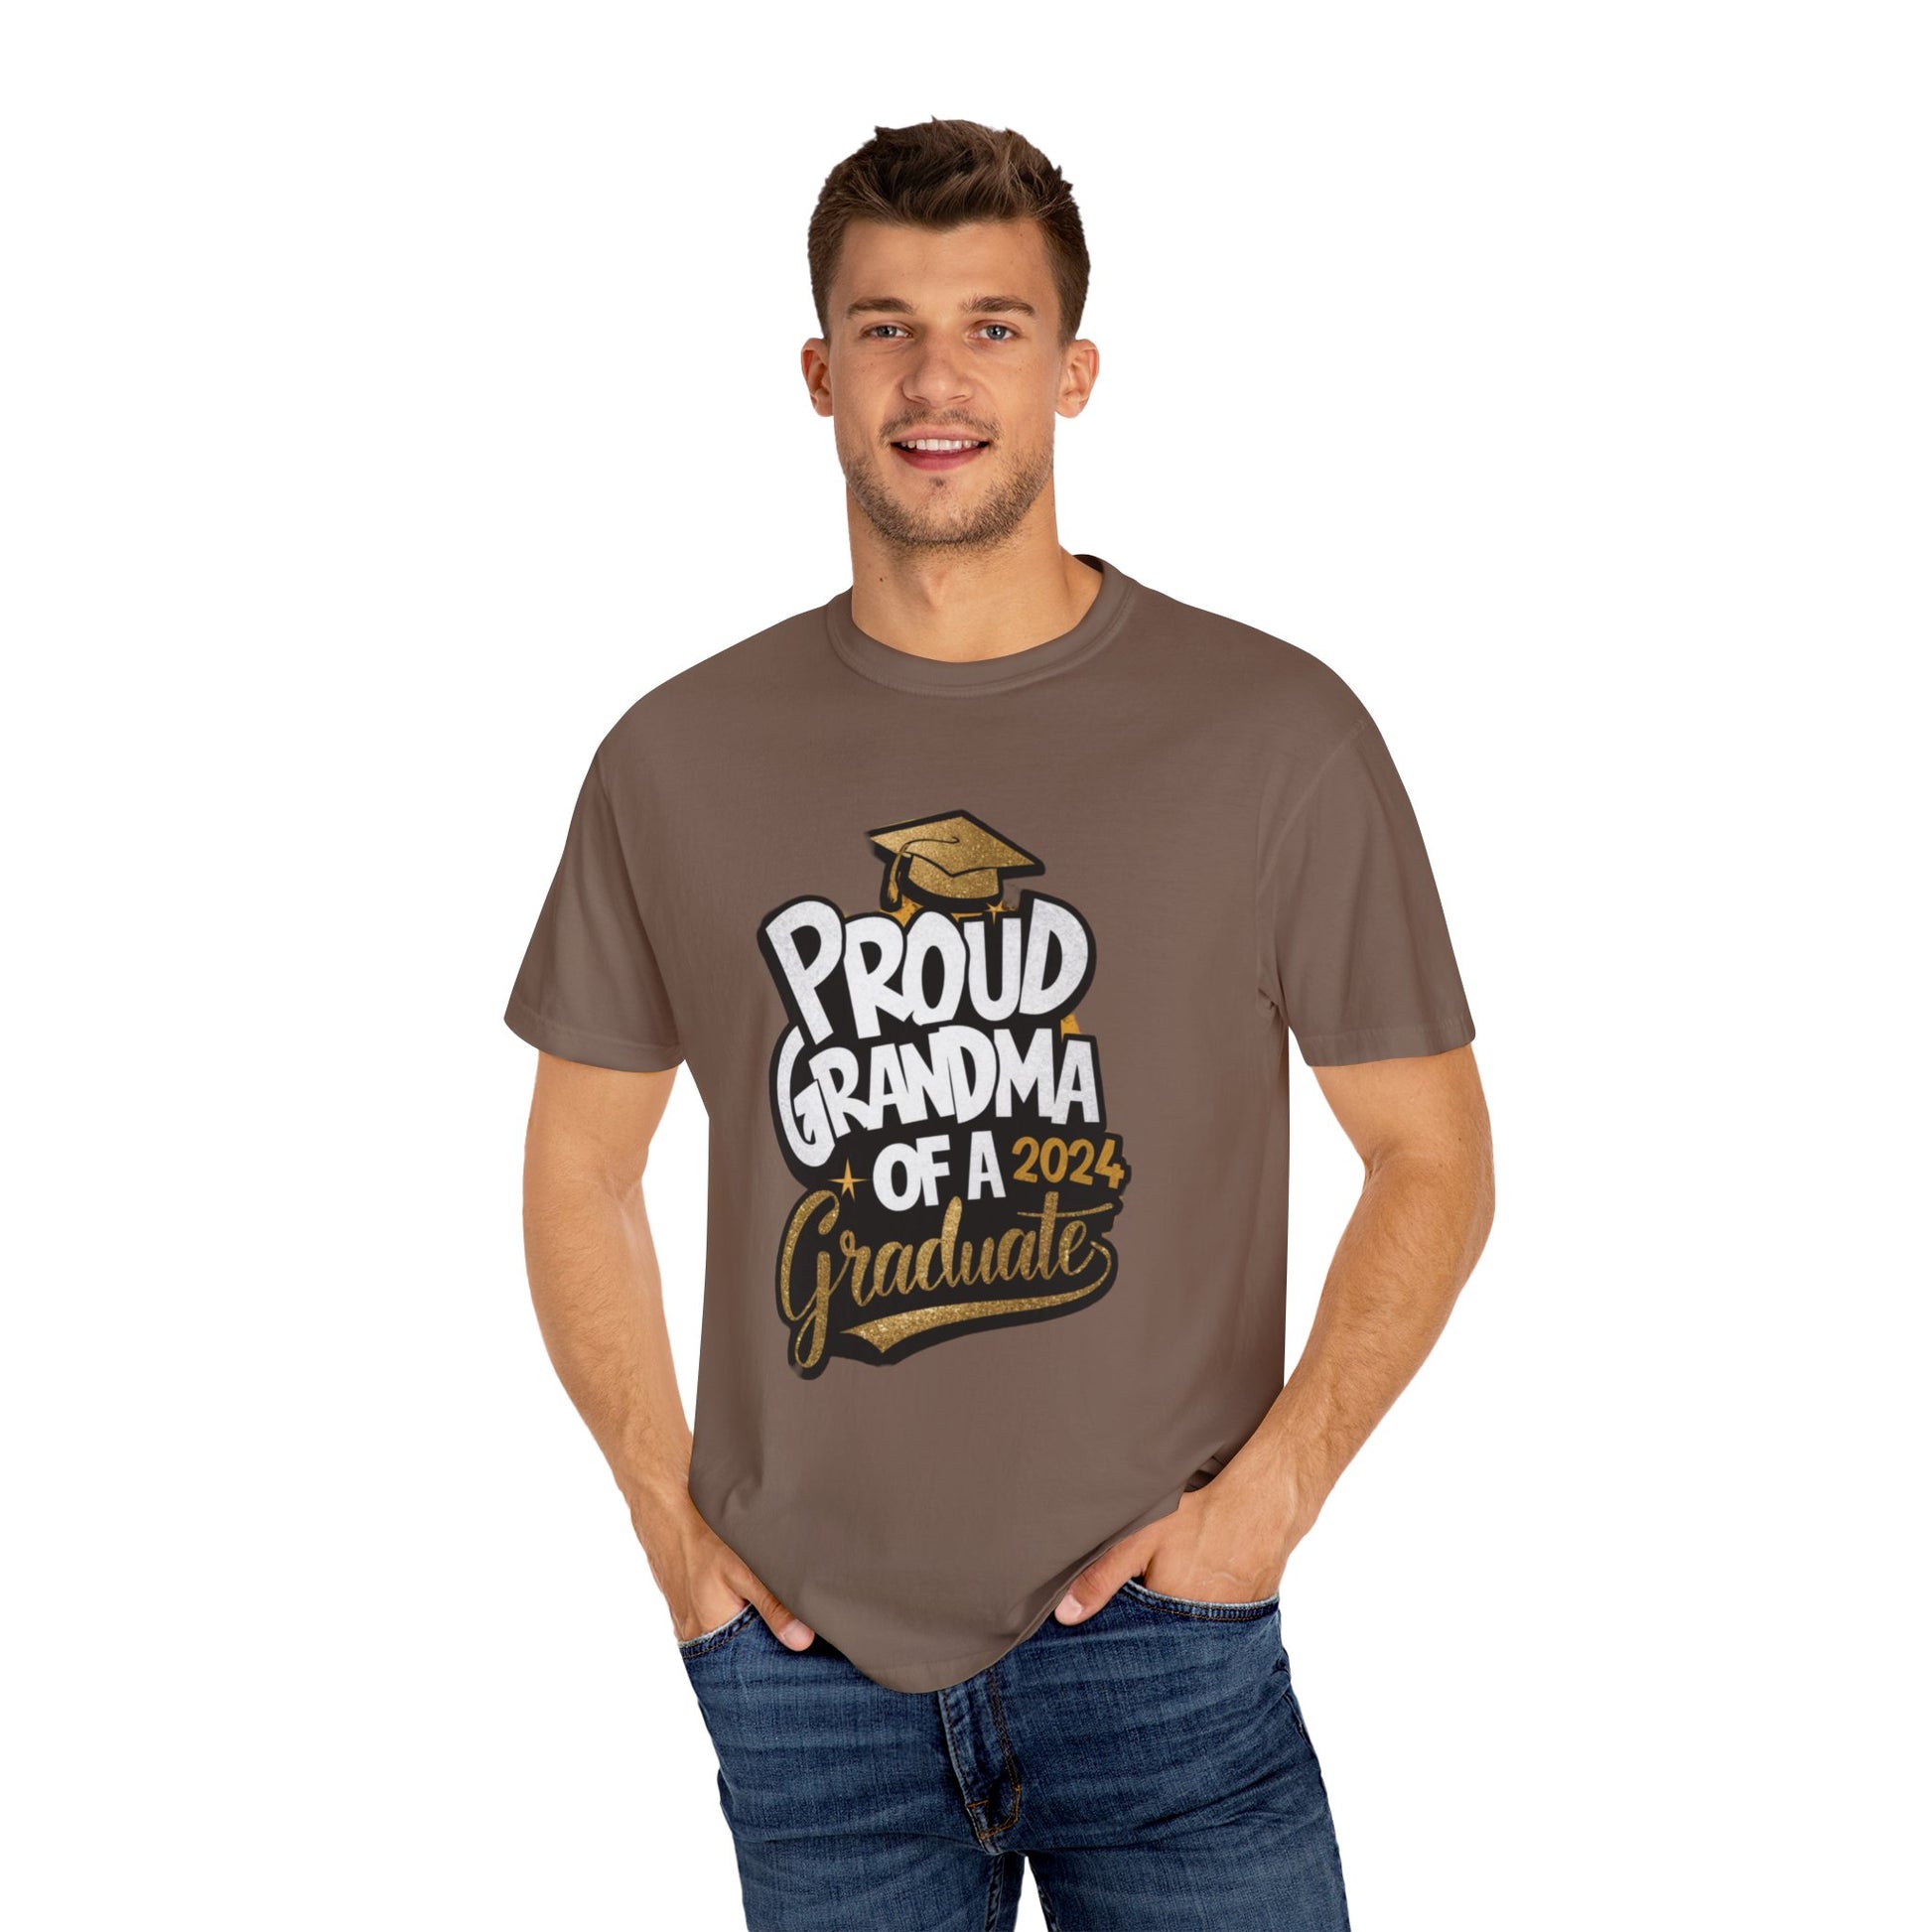 Proud of Grandma 2024 Graduate Unisex Garment-dyed T-shirt Cotton Funny Humorous Graphic Soft Premium Unisex Men Women Espresso T-shirt Birthday Gift-60